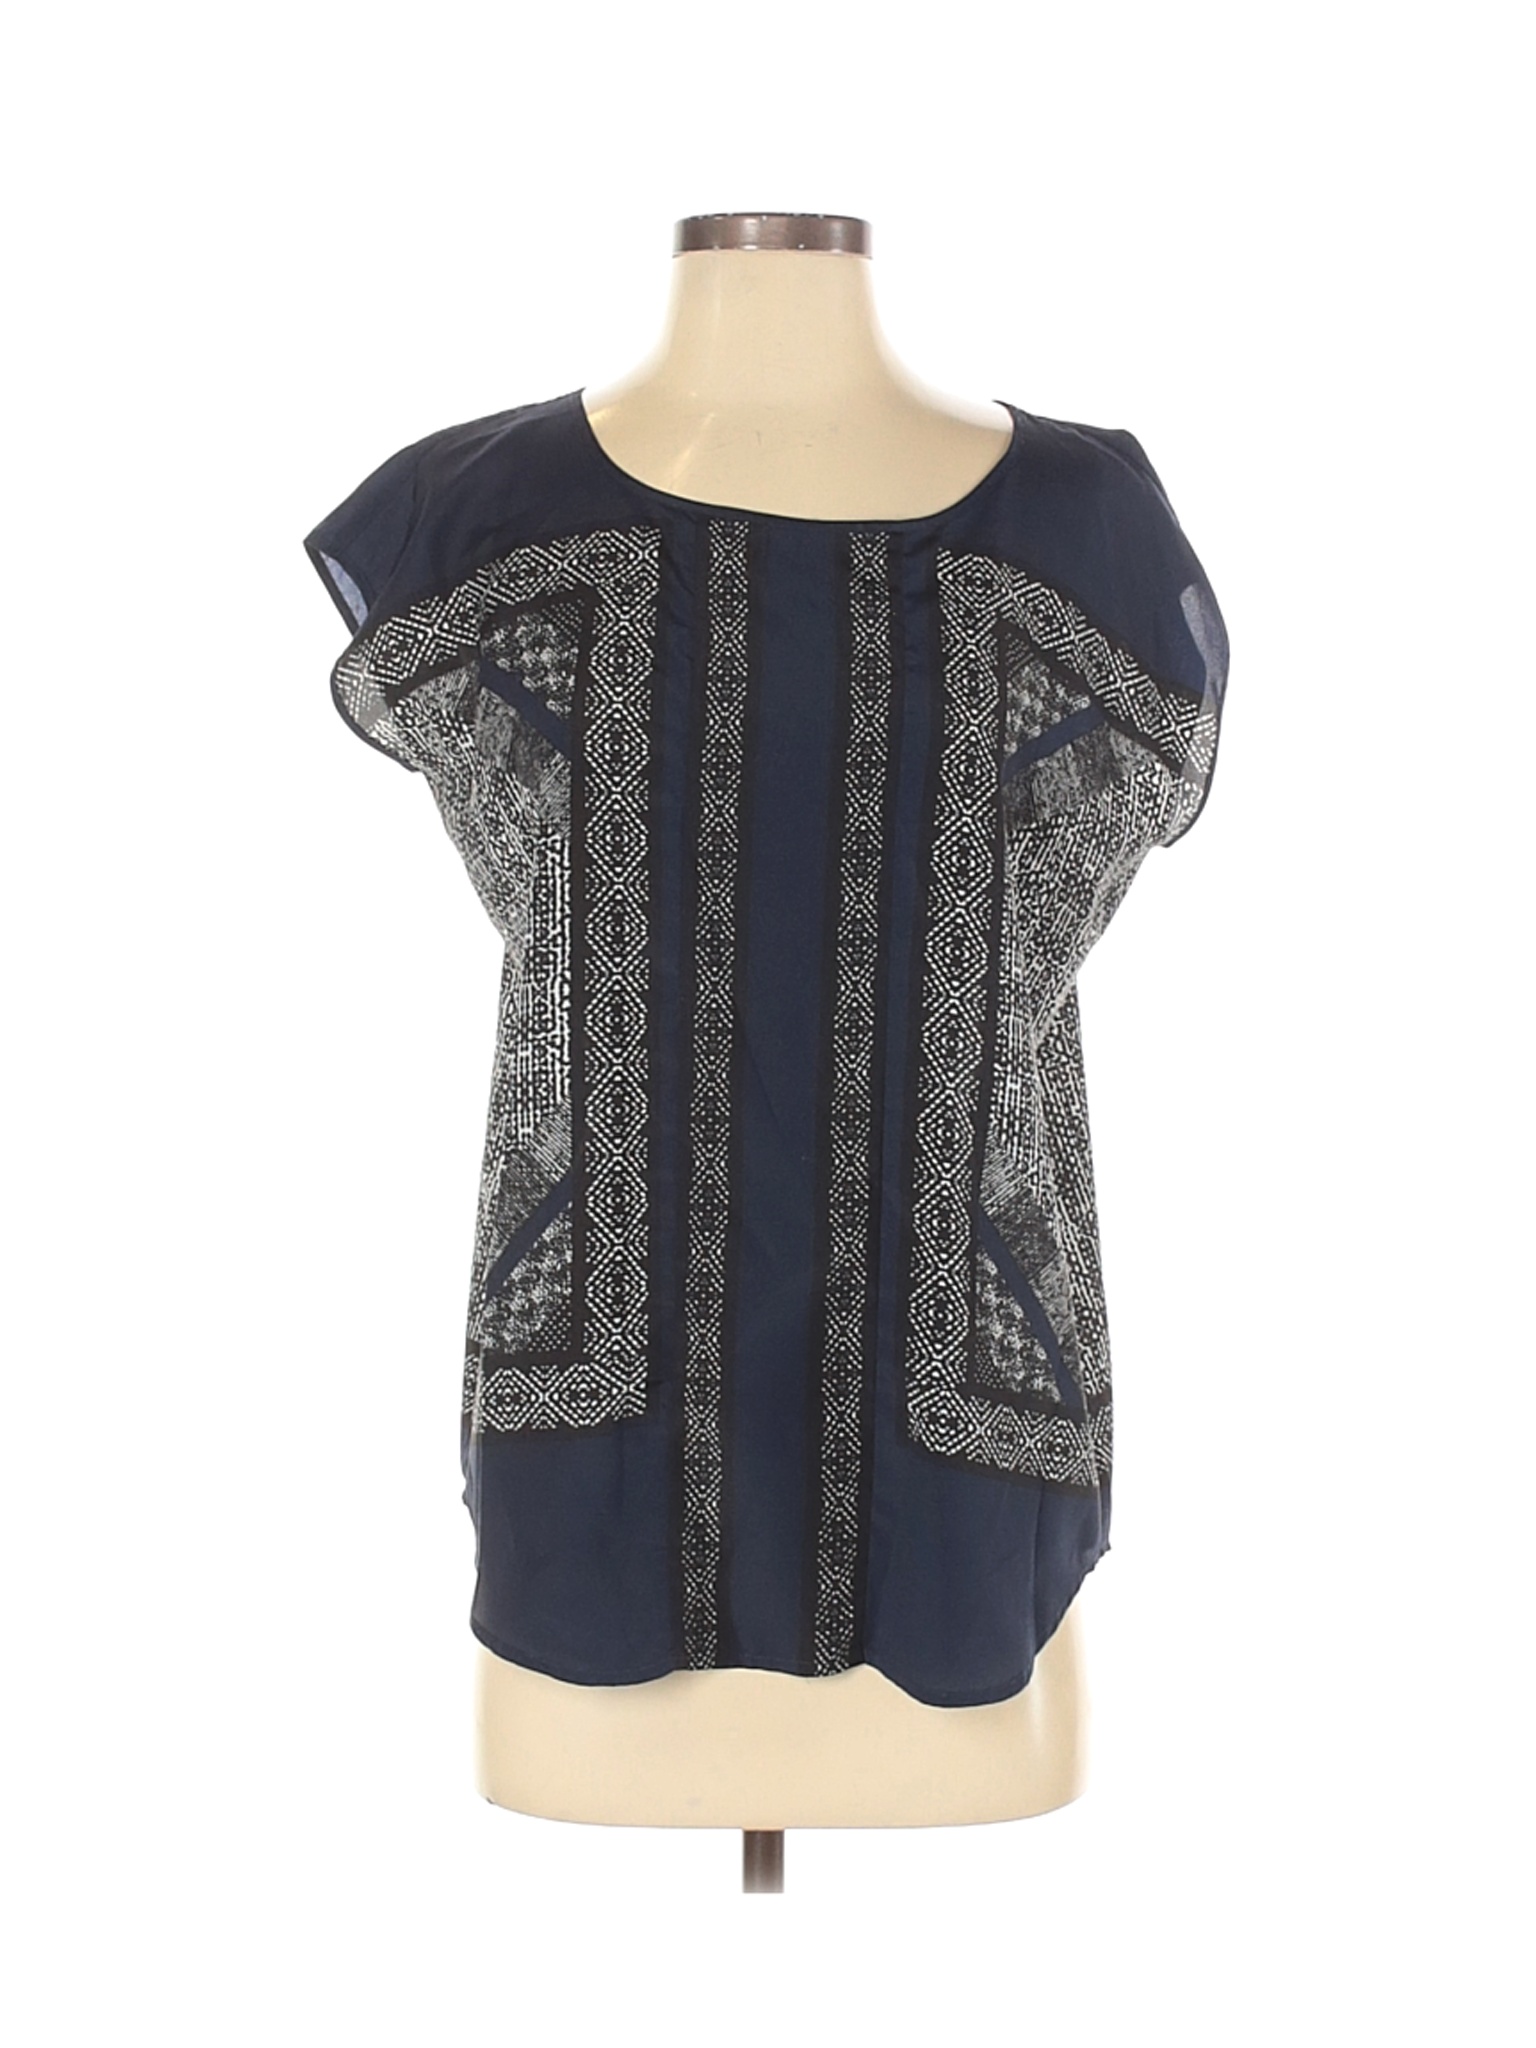 Cynthia Rowley TJX Women Blue Short Sleeve Blouse S | eBay